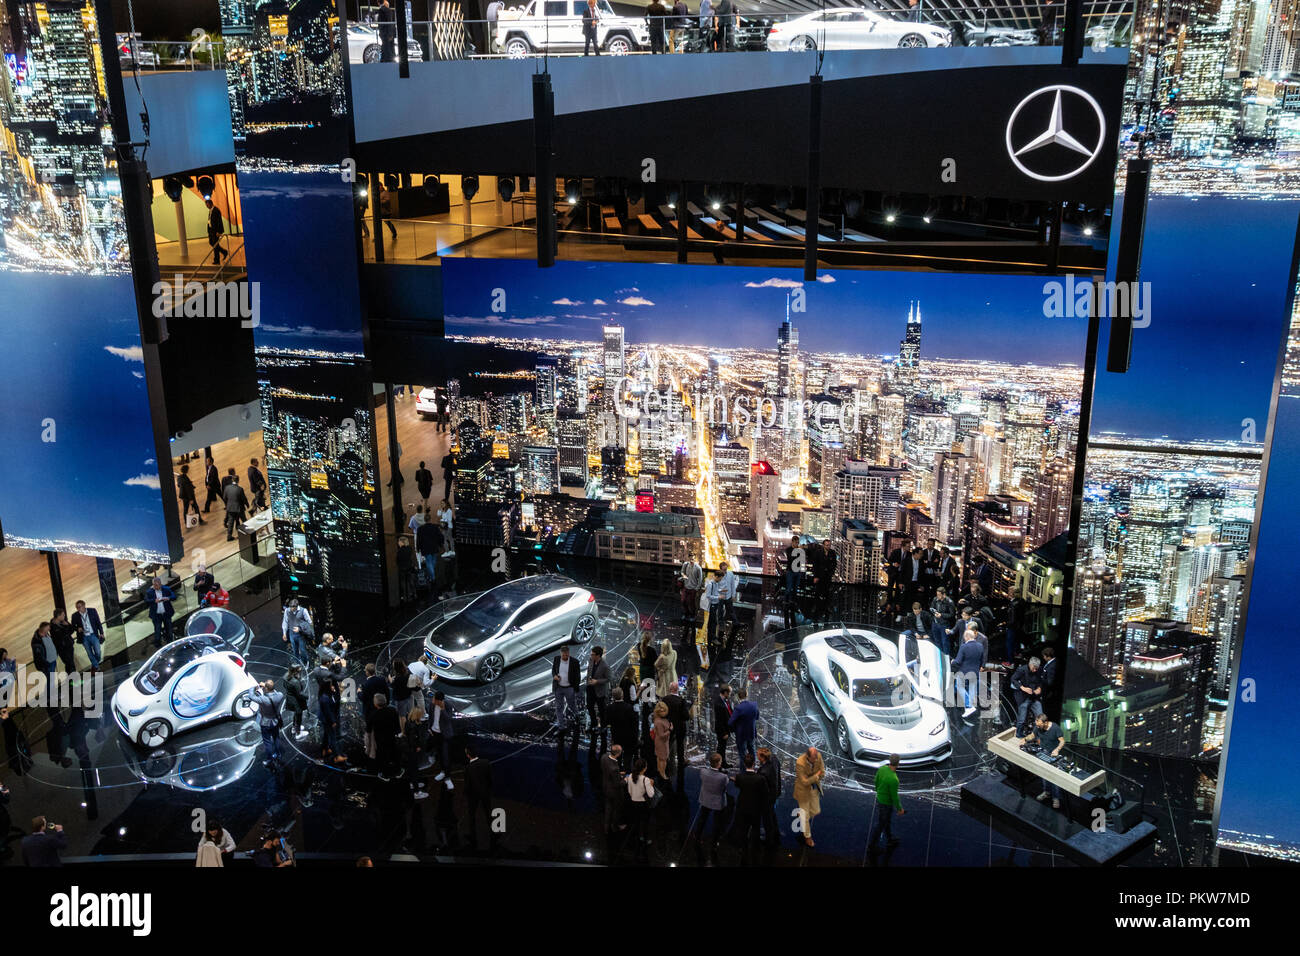 FRANKFURT, GERMANY - SEP 13, 2017: Mercedes Benz car Festival Hall at the Frankfurt IAA Motor Show. Stock Photo